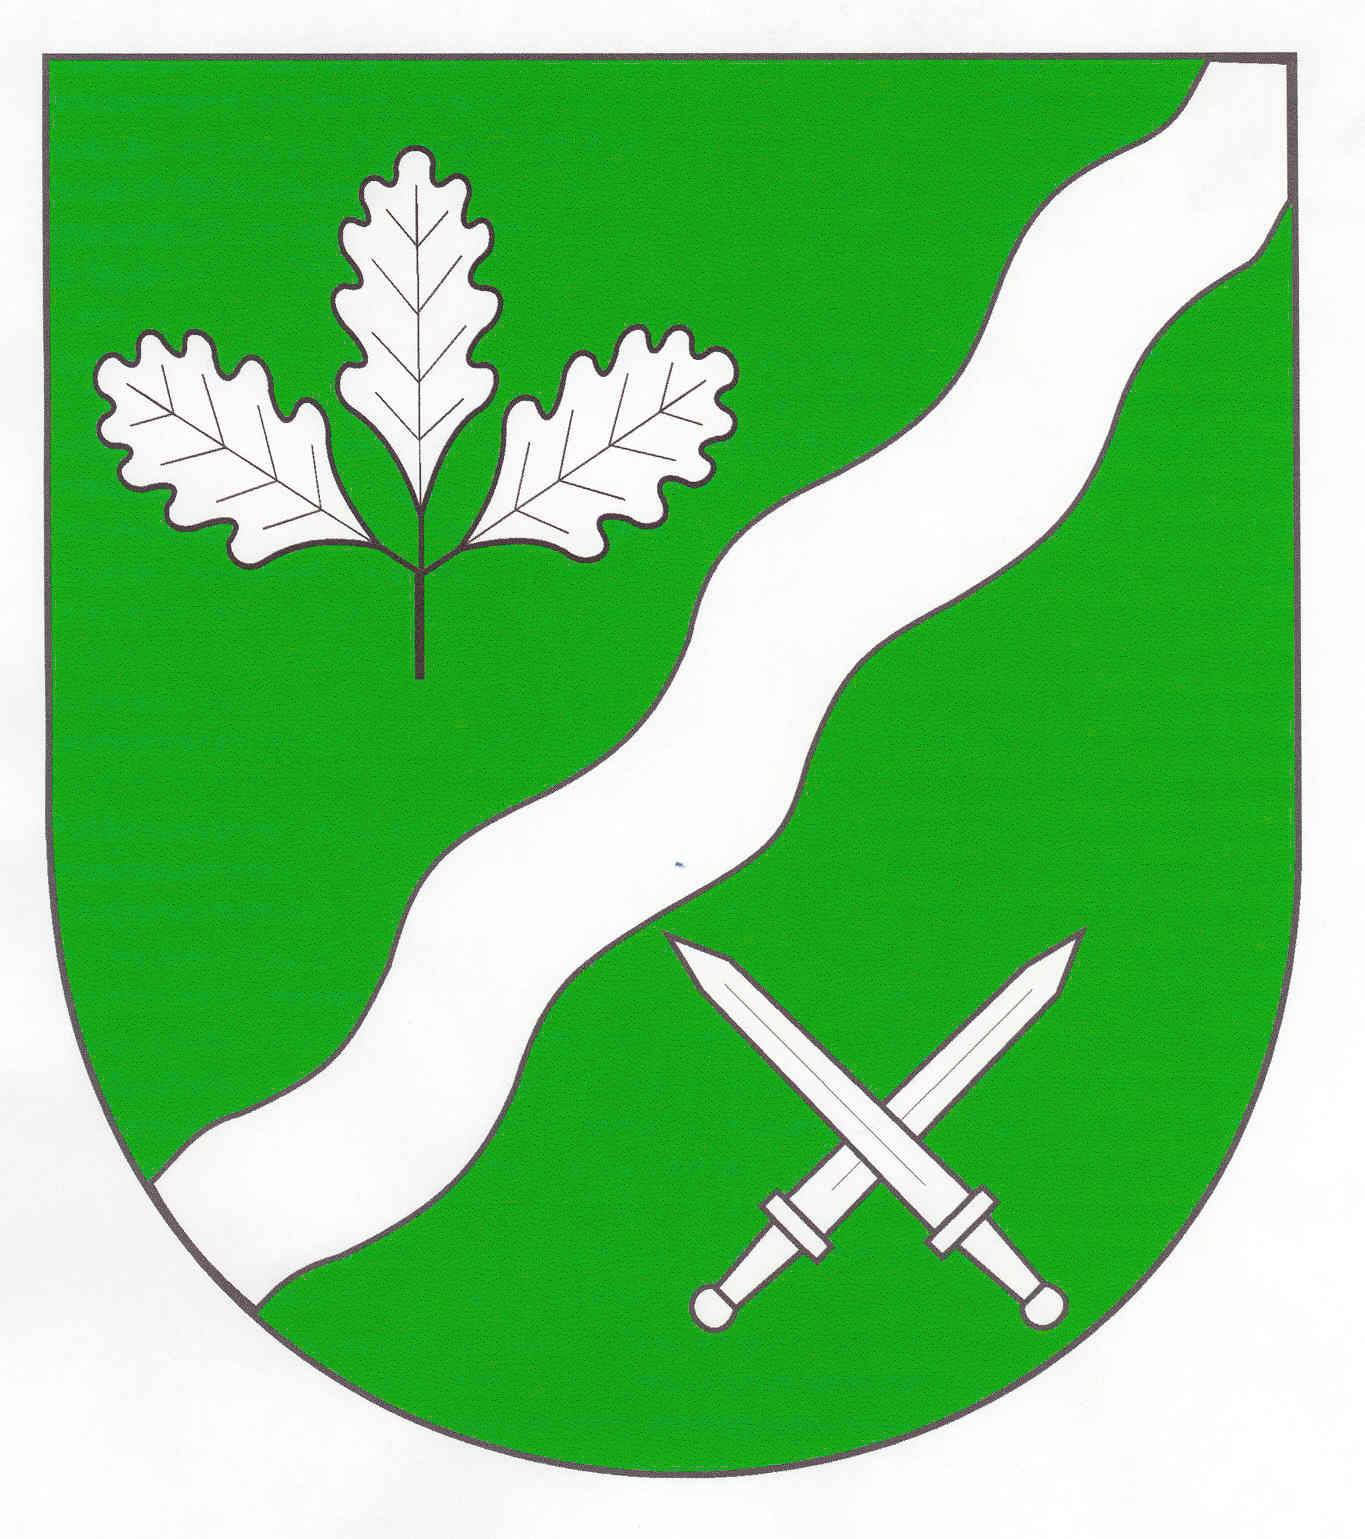 Wappen Gemeinde Lohe-Föhrden, Kreis Rendsburg-Eckernförde